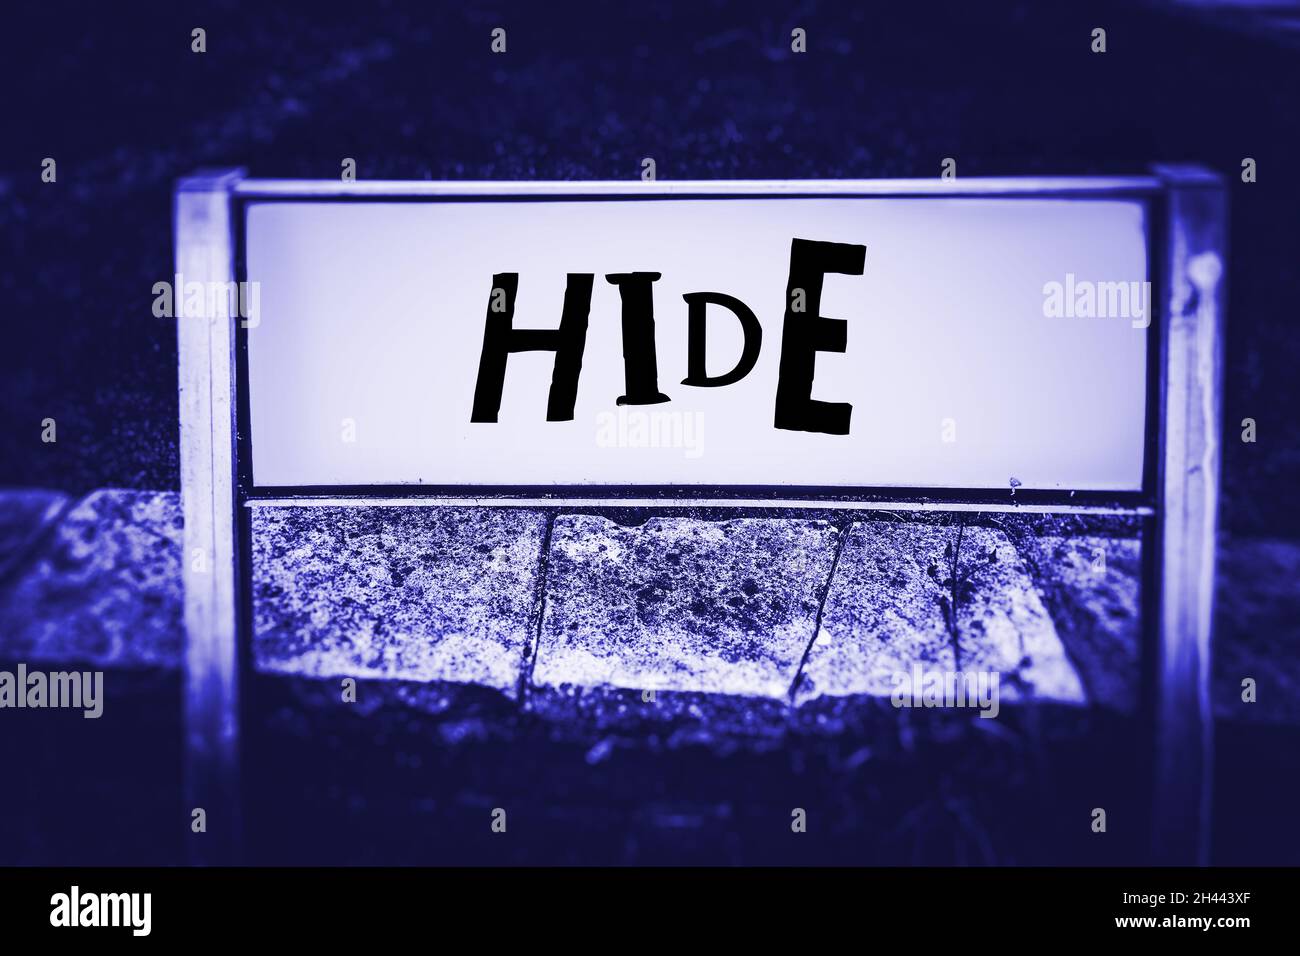 Hide written on a street sign in a neon blue tone Stock Photo